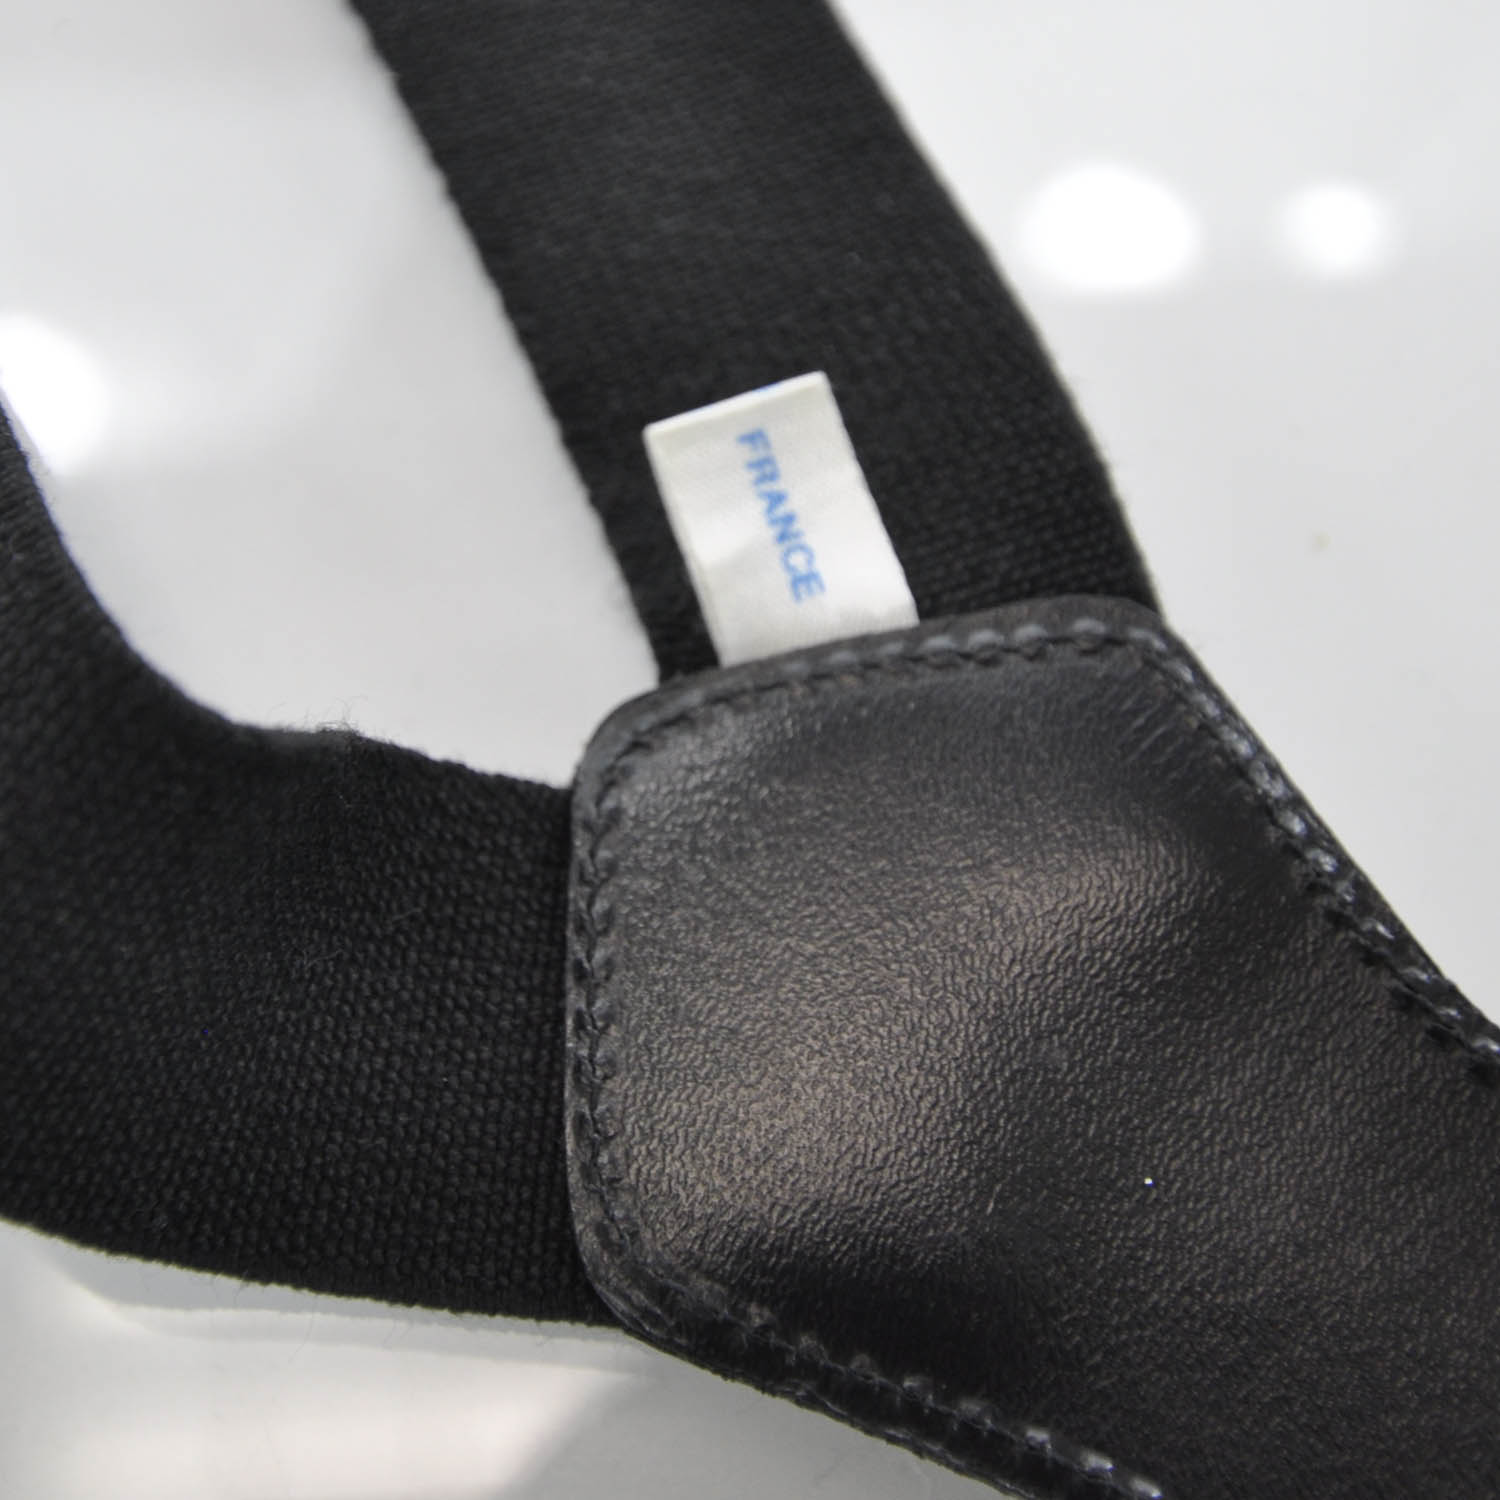 CHANEL Logo Suspenders Black White 32559